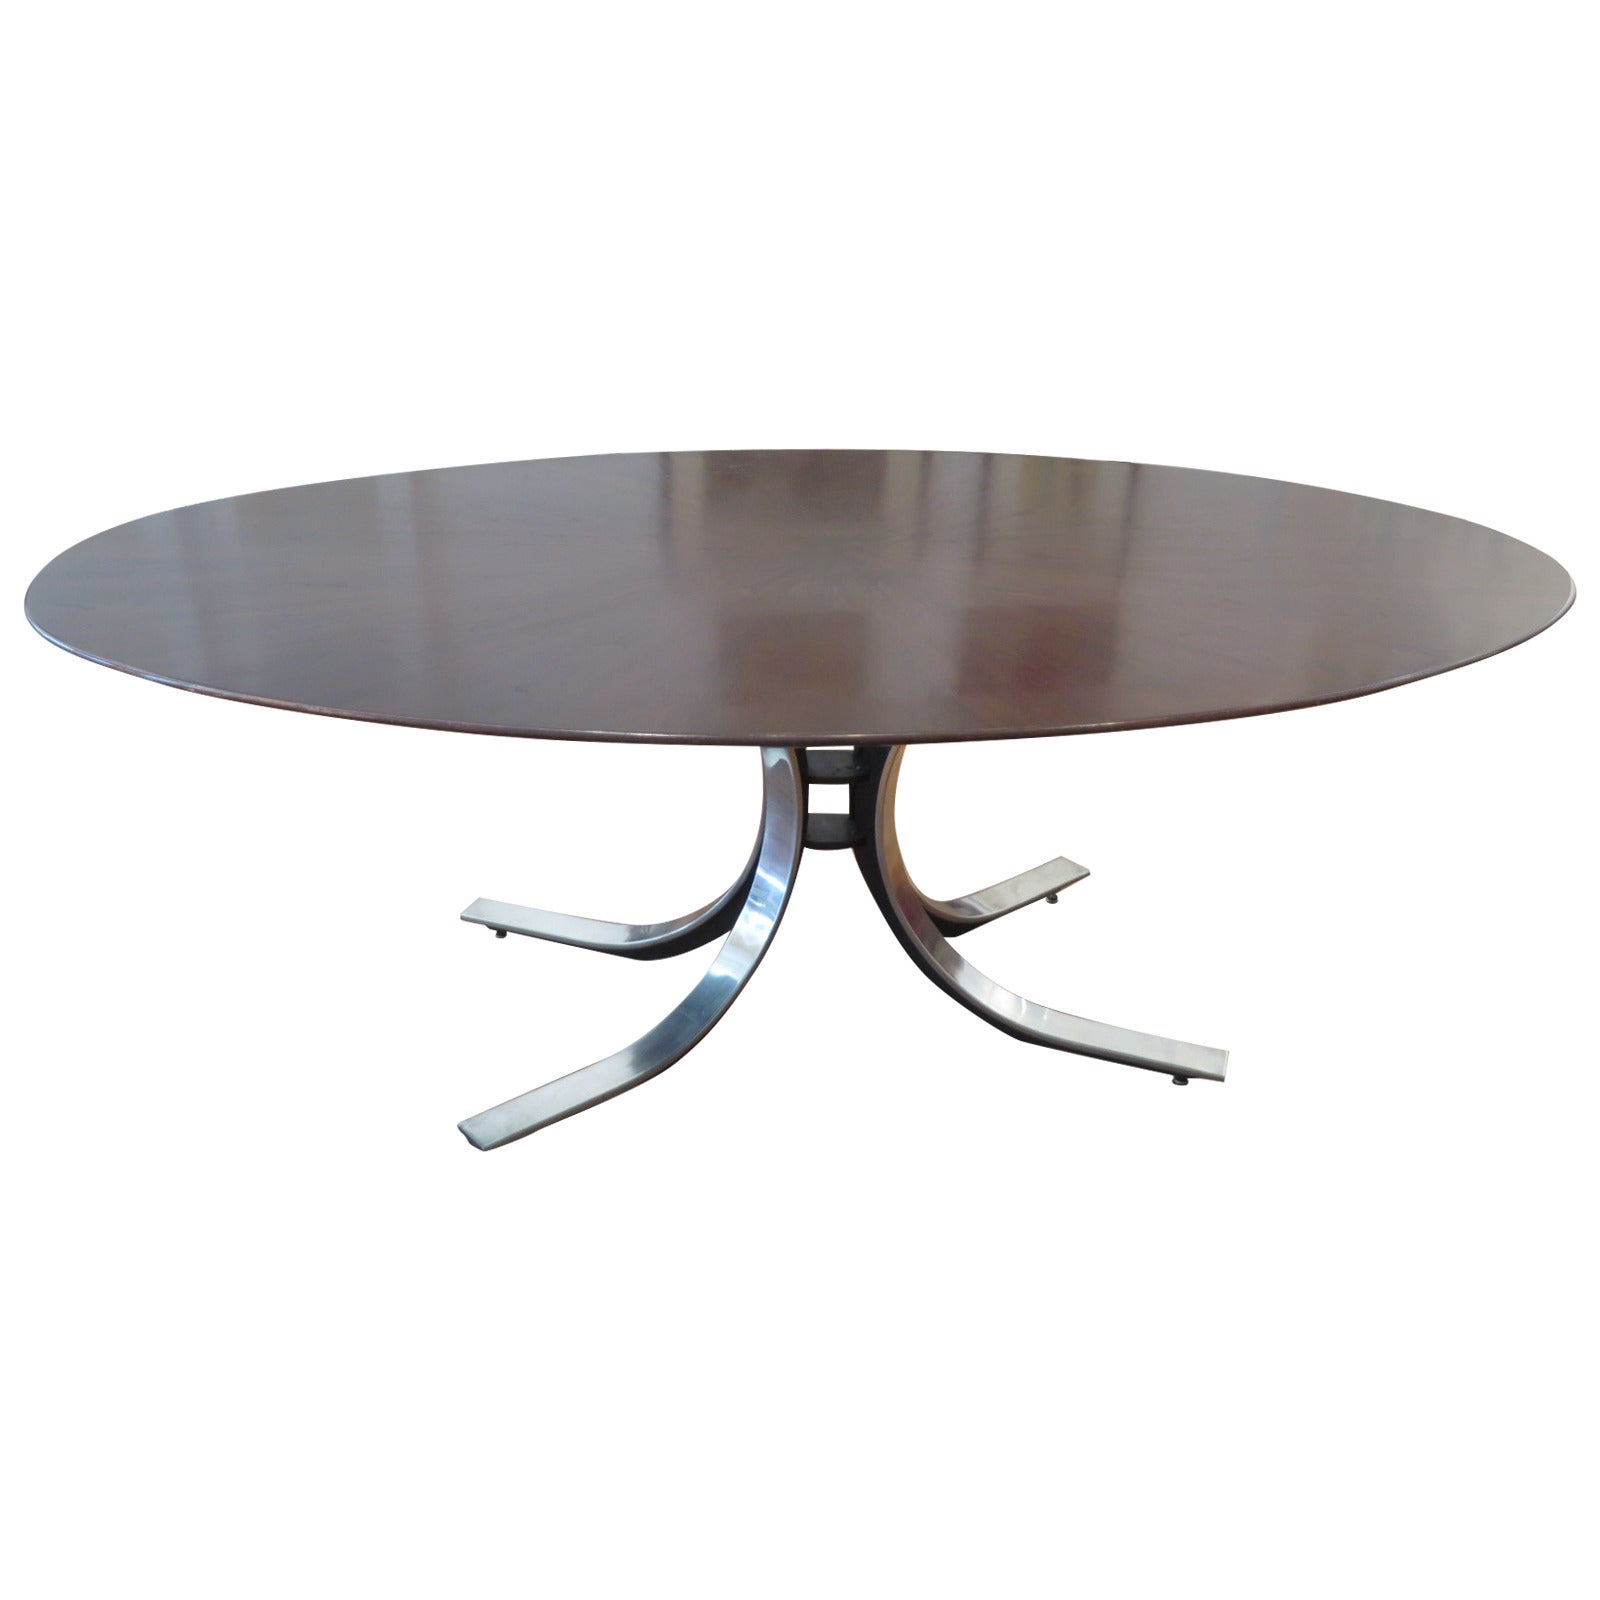 Dining / Conference Table Designed by Osvaldo Borsani